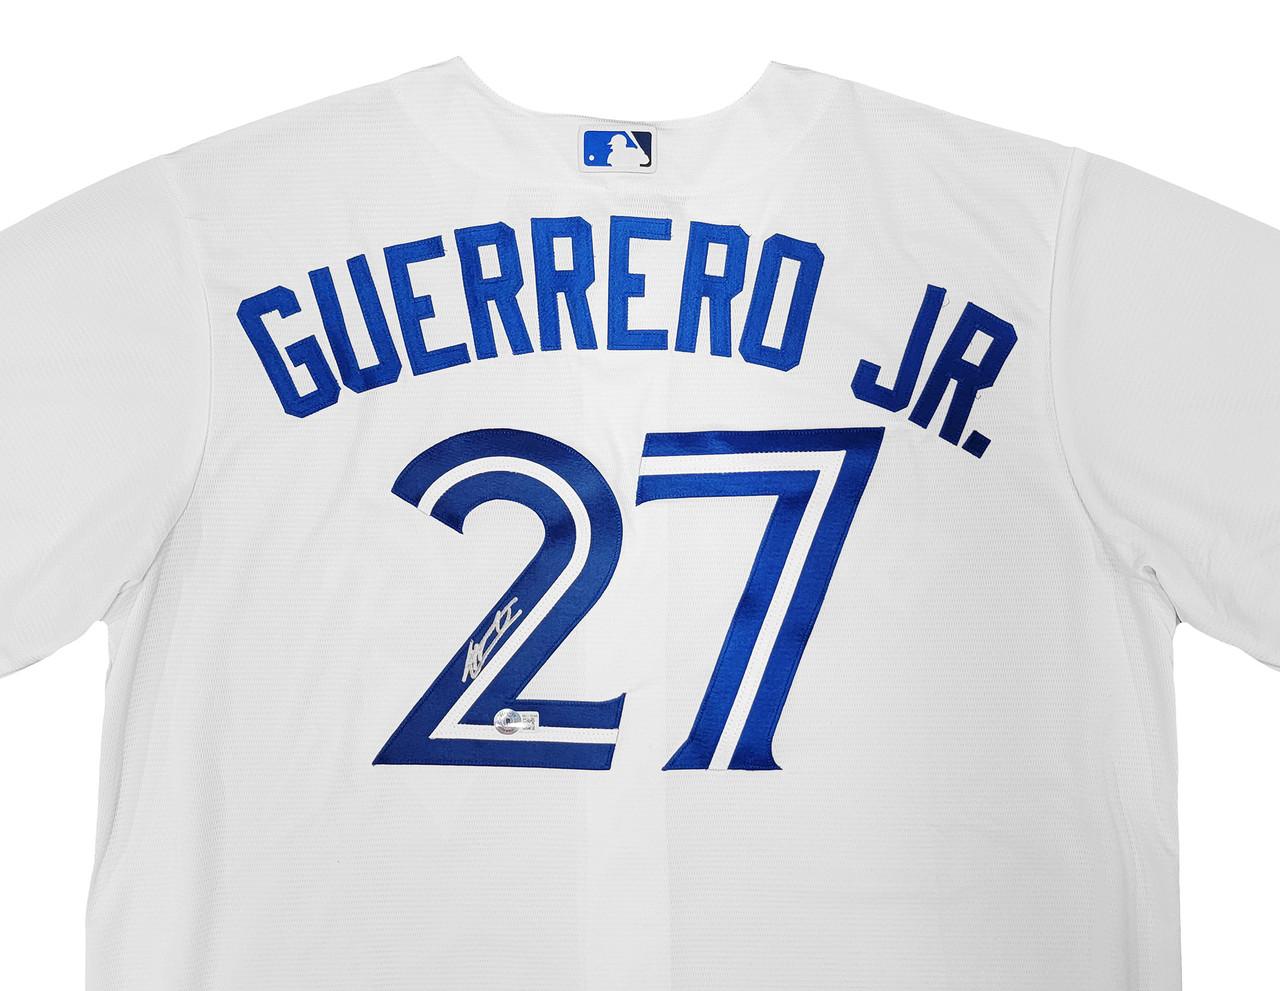 Vladimir Guerrero Jr. Signed Toronto Blue Jays Replica Nike White Jersey